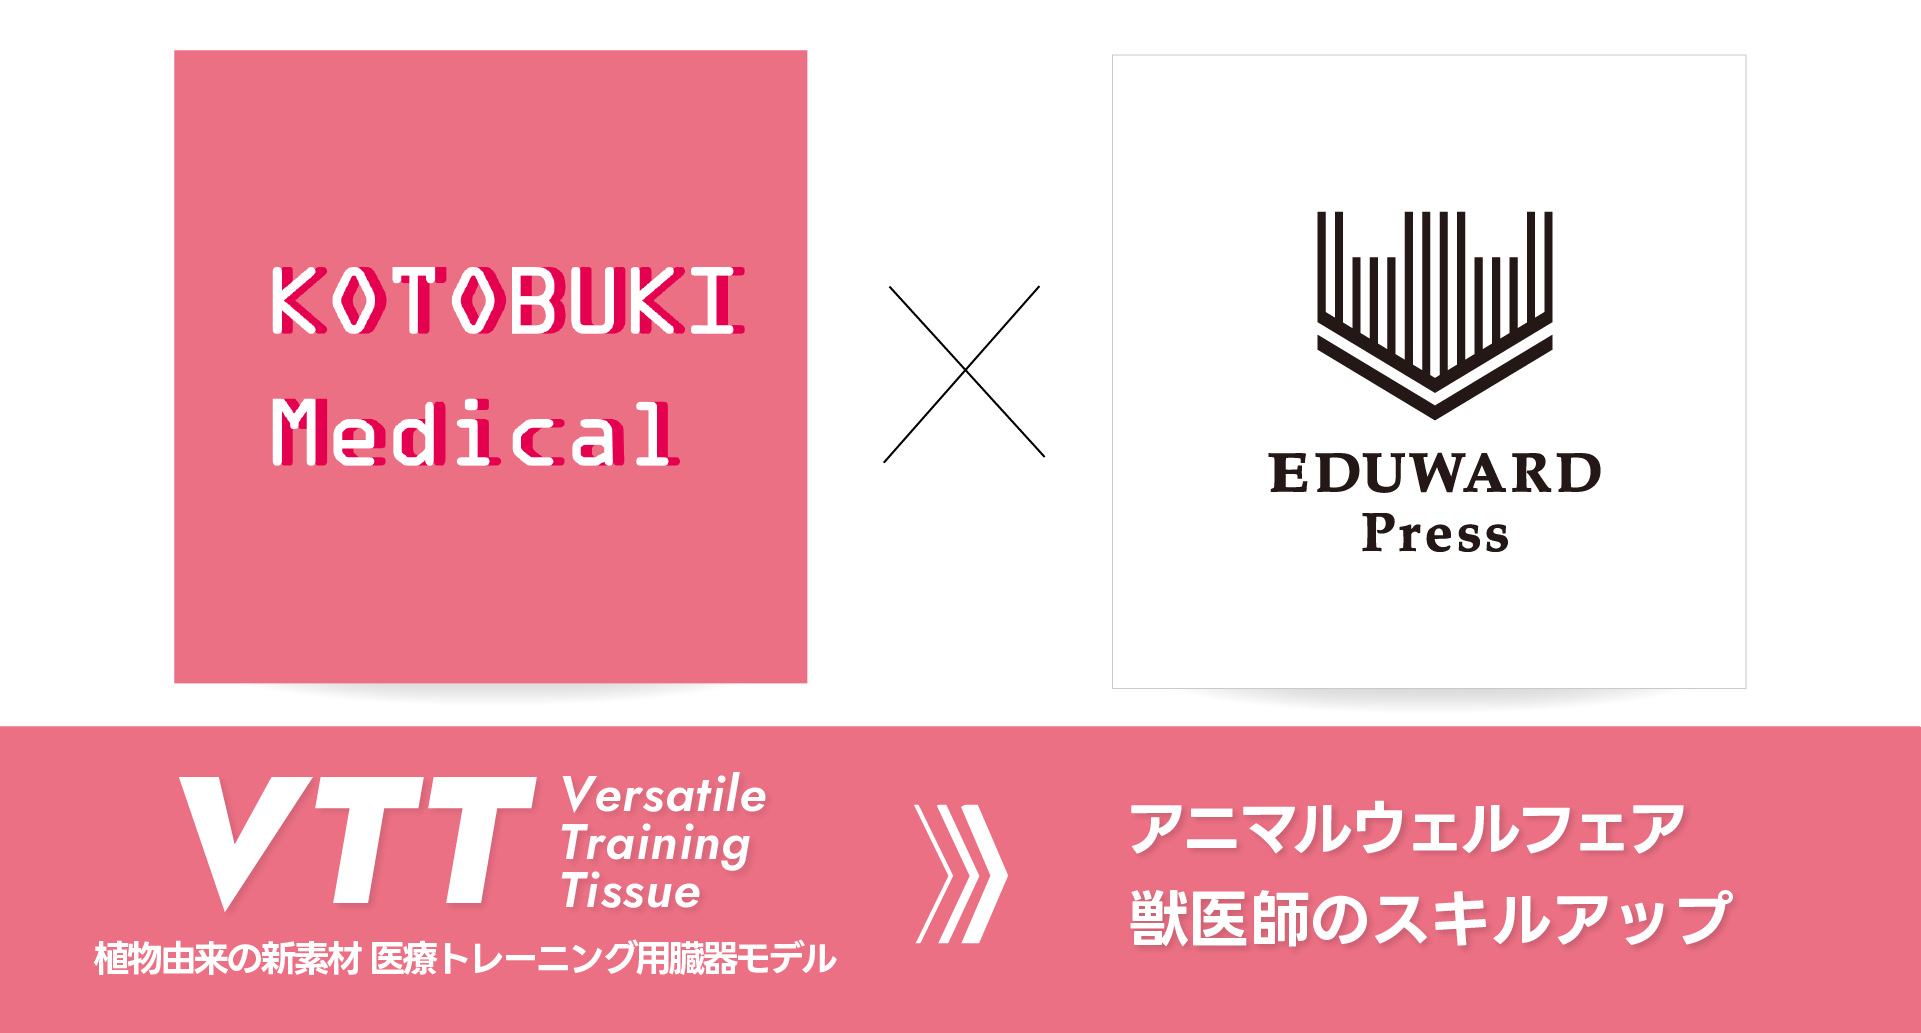 EDUWARD PressがKOTOBUKI Medicalと業務提携｜株式会社EDUWARD Pressの